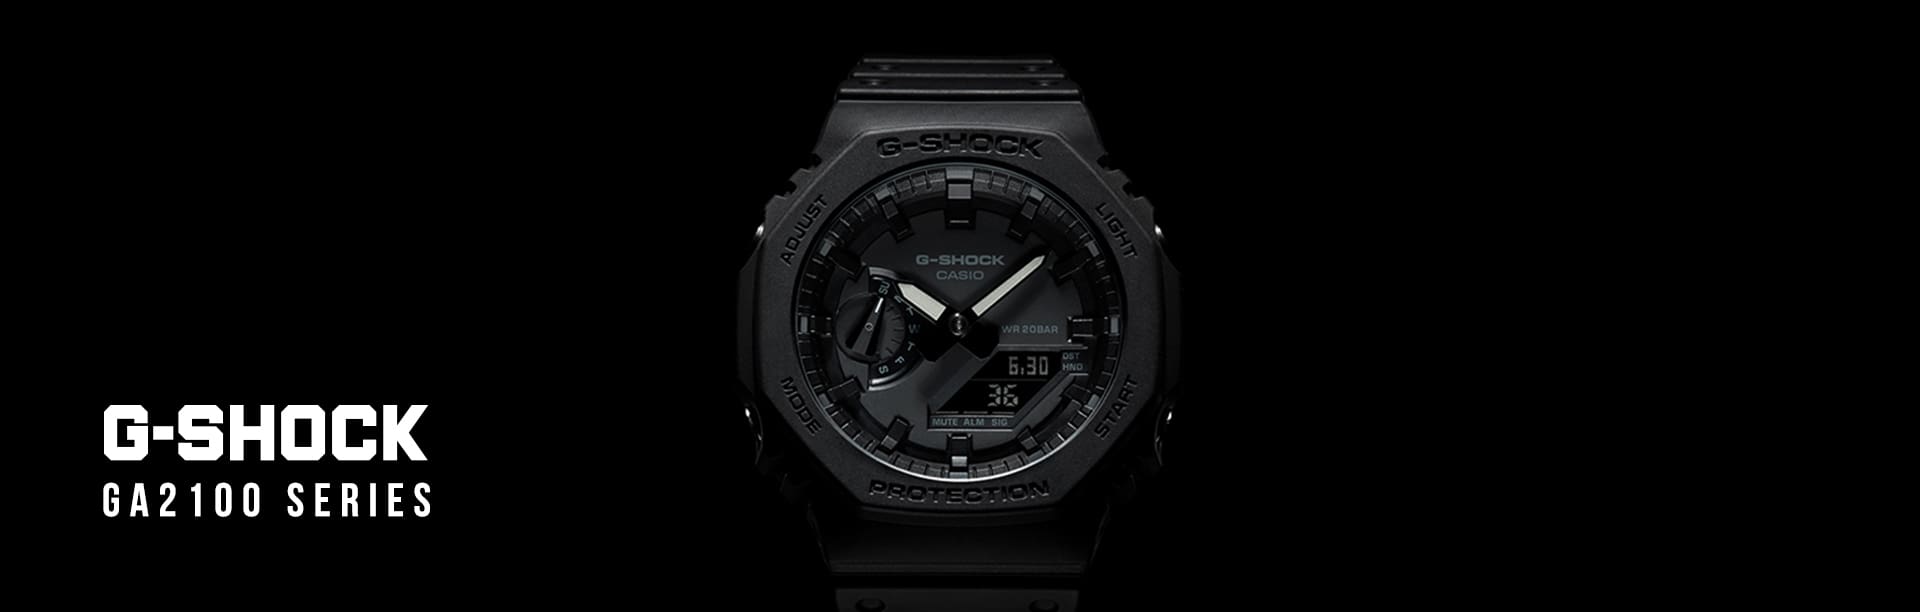 GA2100 black analog digital watch fading away into a black background landscape